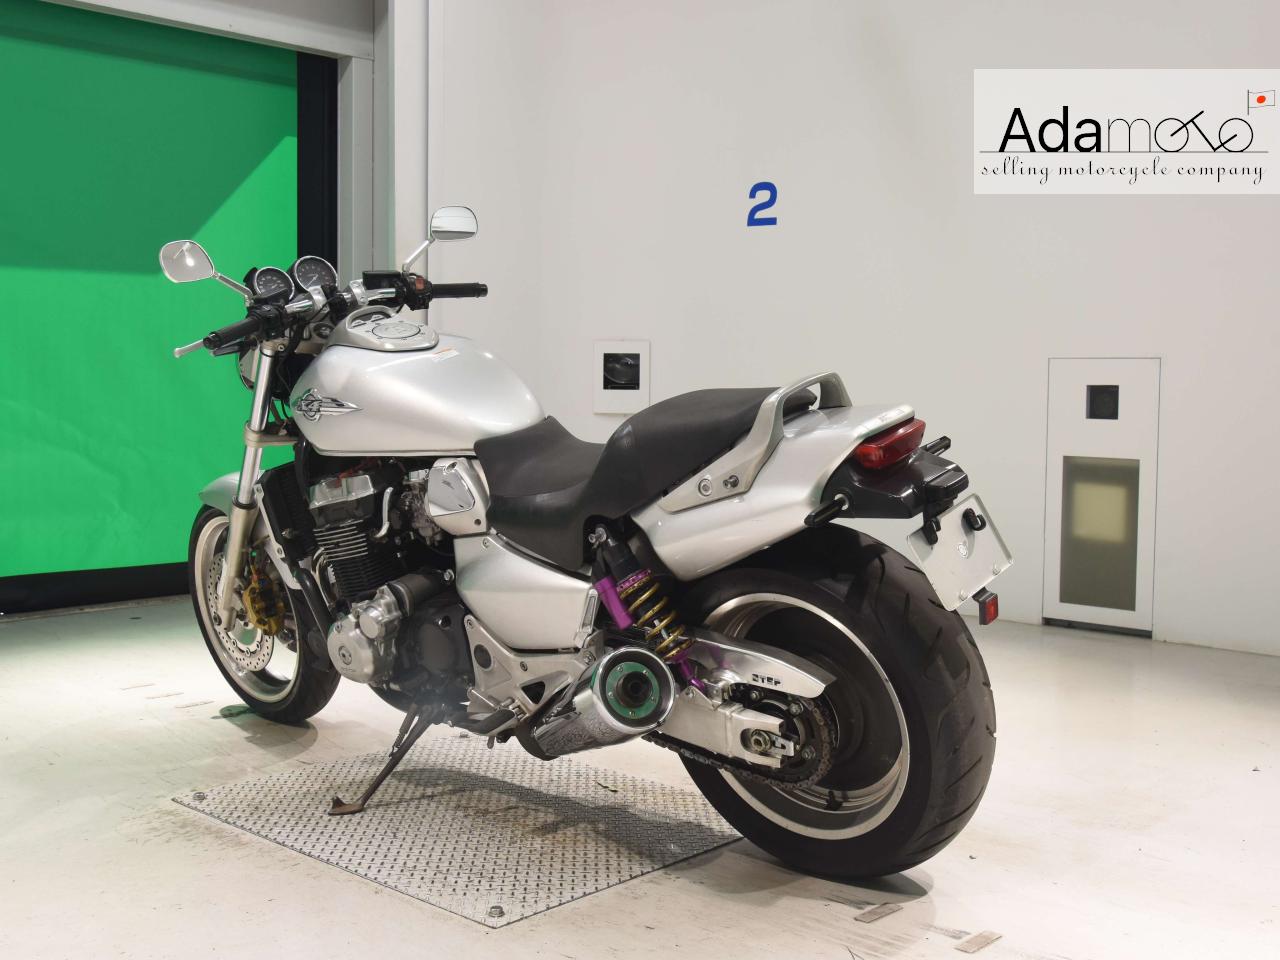 Honda X4 - Adamoto - Motorcycles from Japan